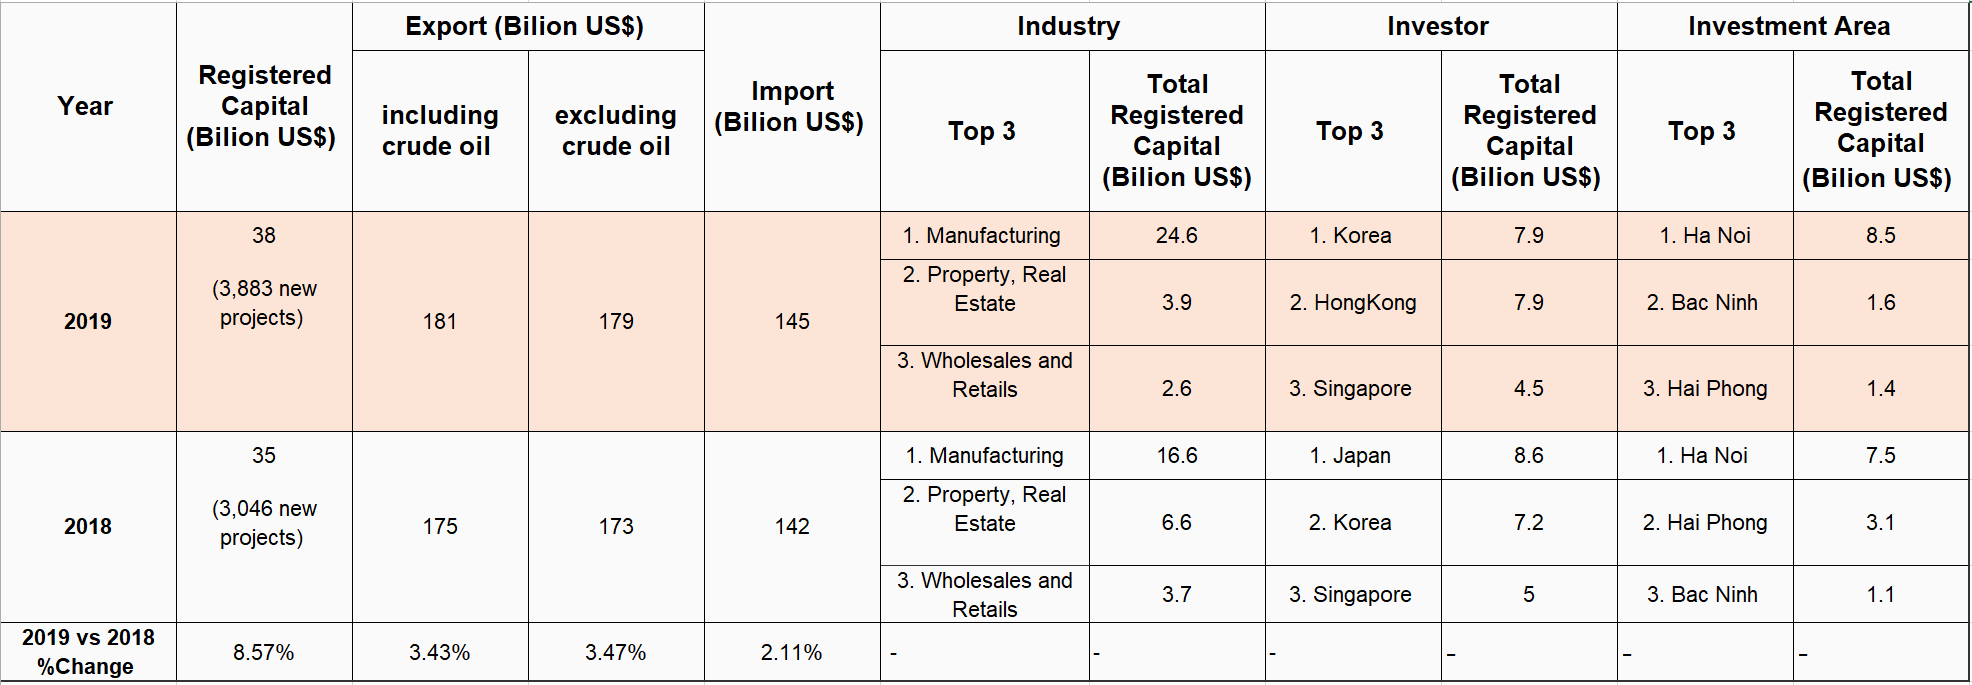 Opportunities of investment in Vietnam- Summary of Vietnam FDI 2019 vs 2018